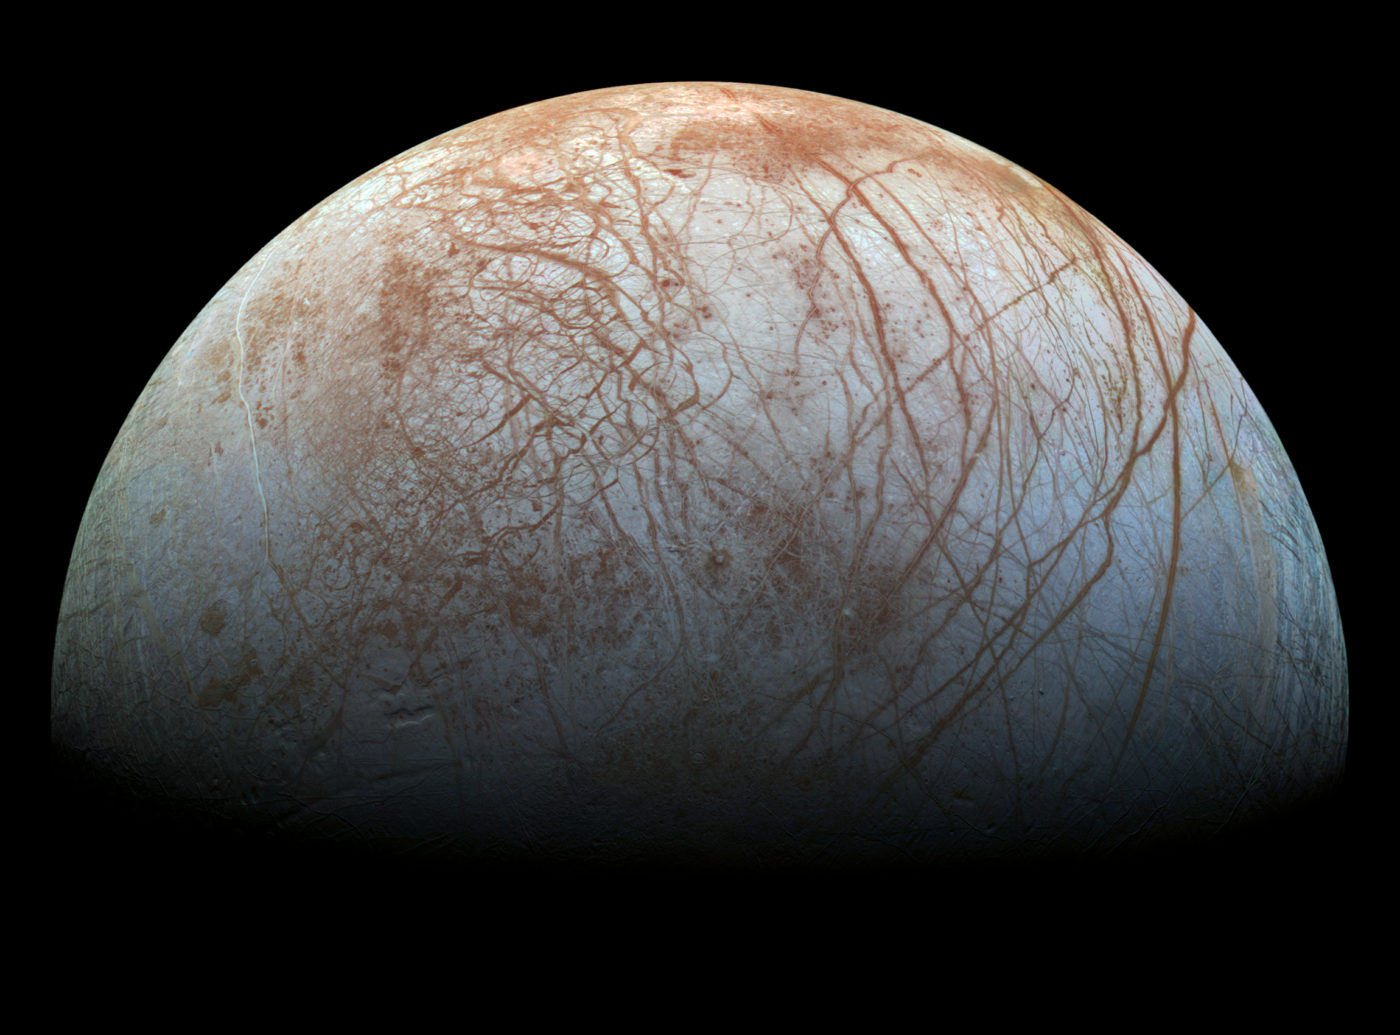 Image of Europa. Credit: NASA/JPL-Caltech/SETI Institute